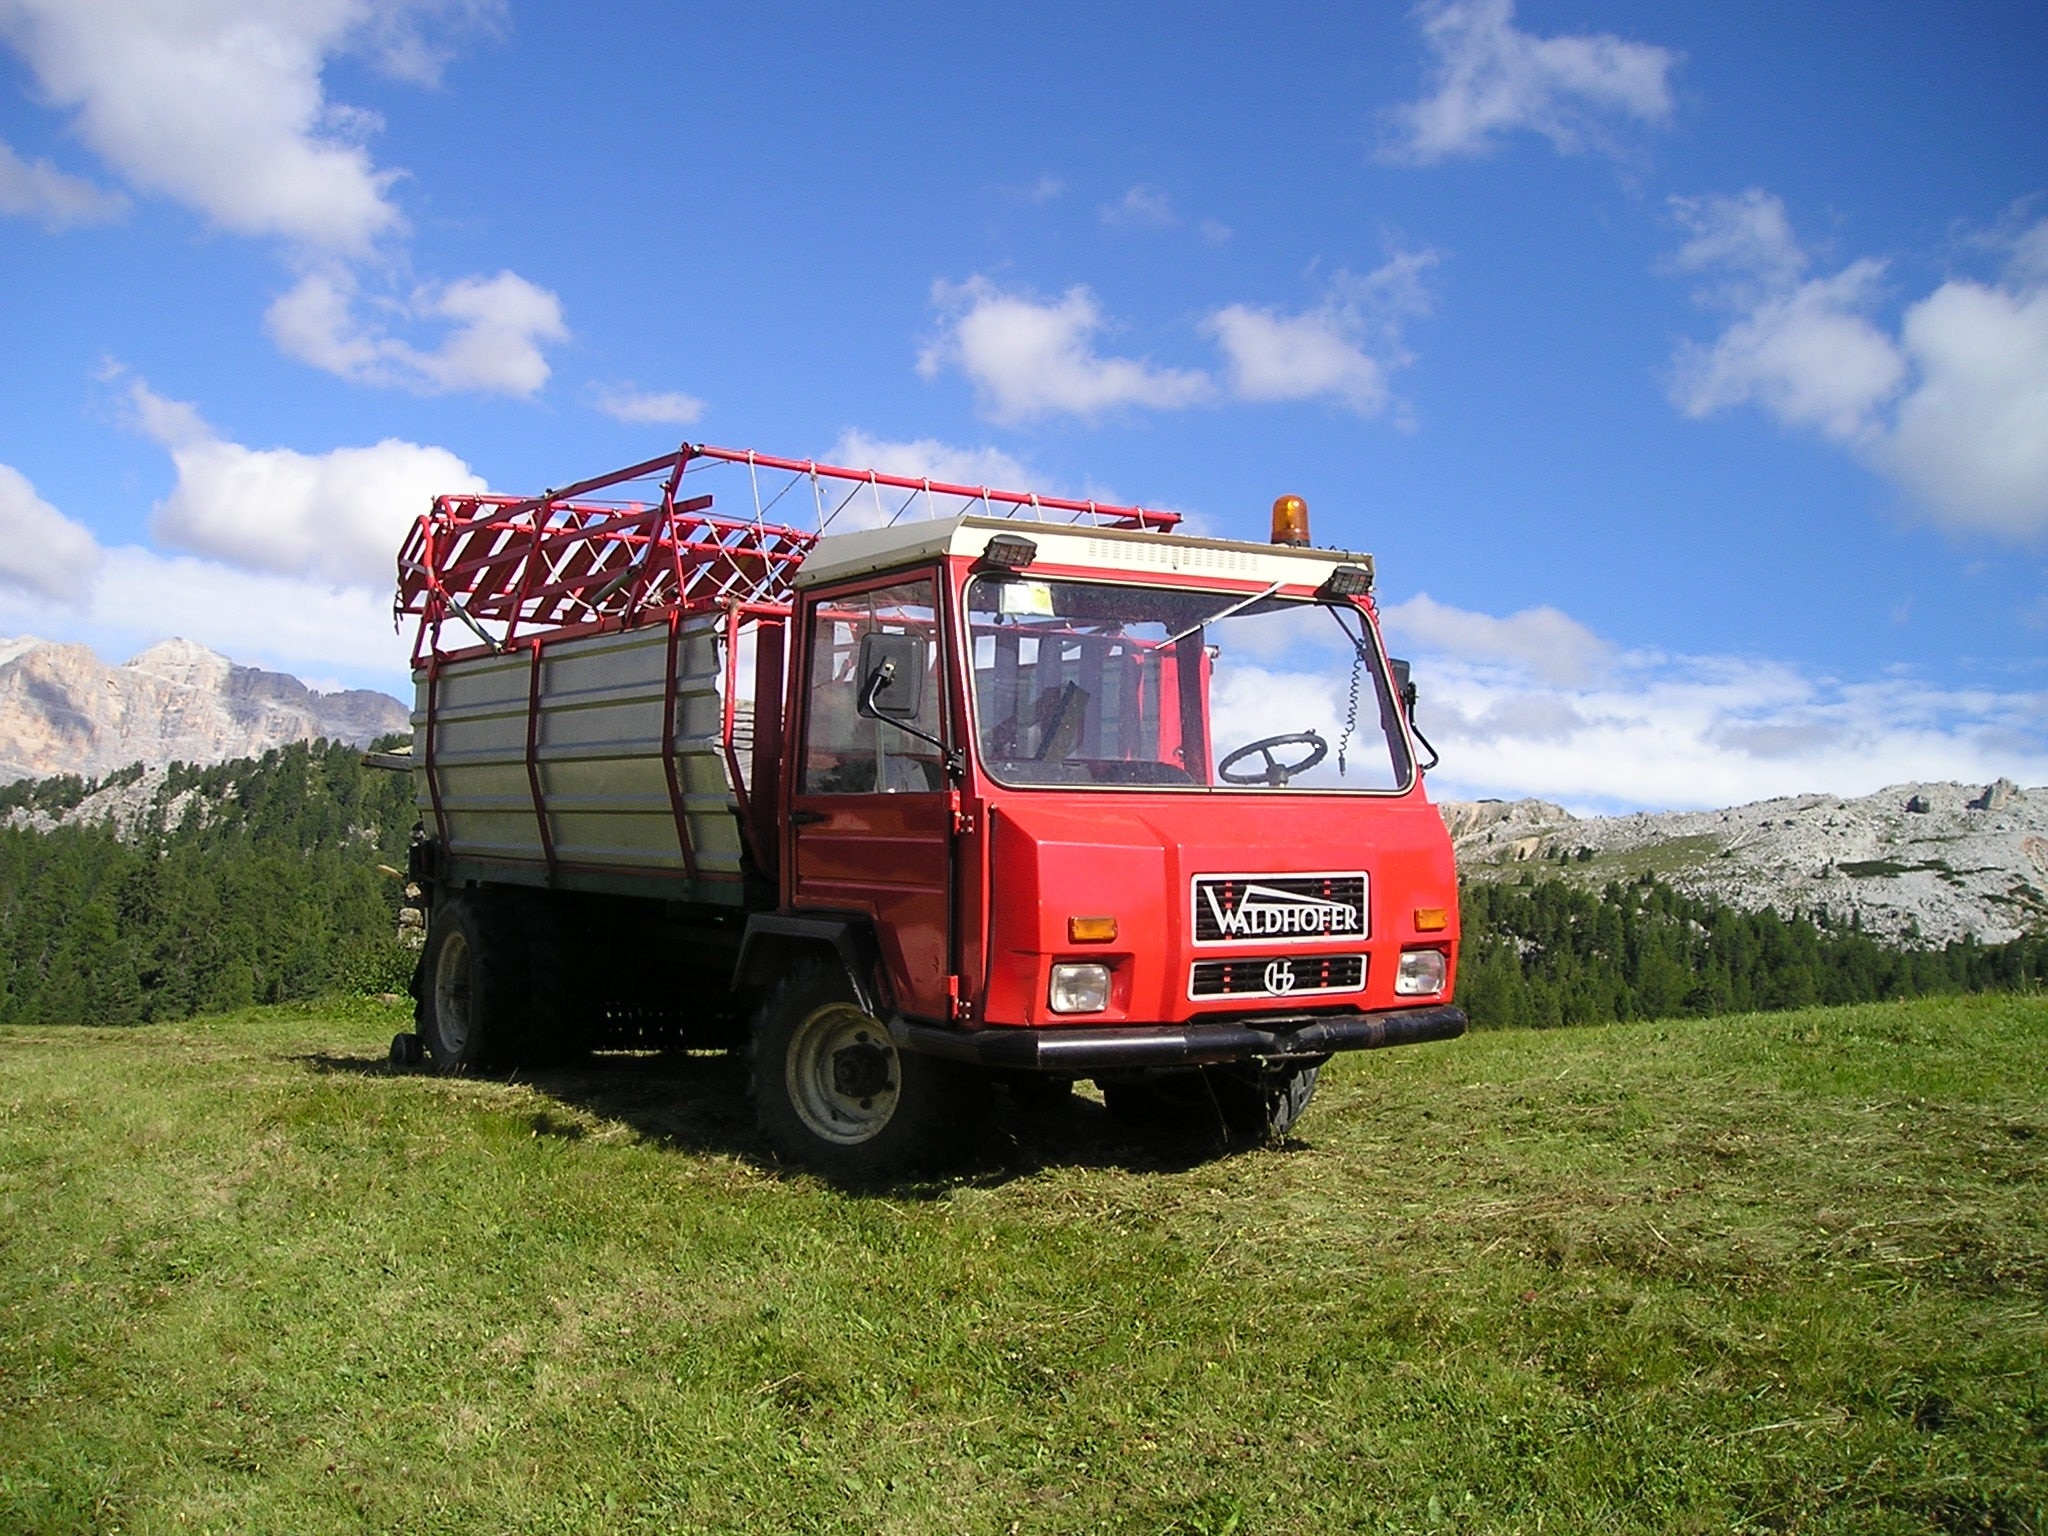 red industrial truck on green grass field at daytie